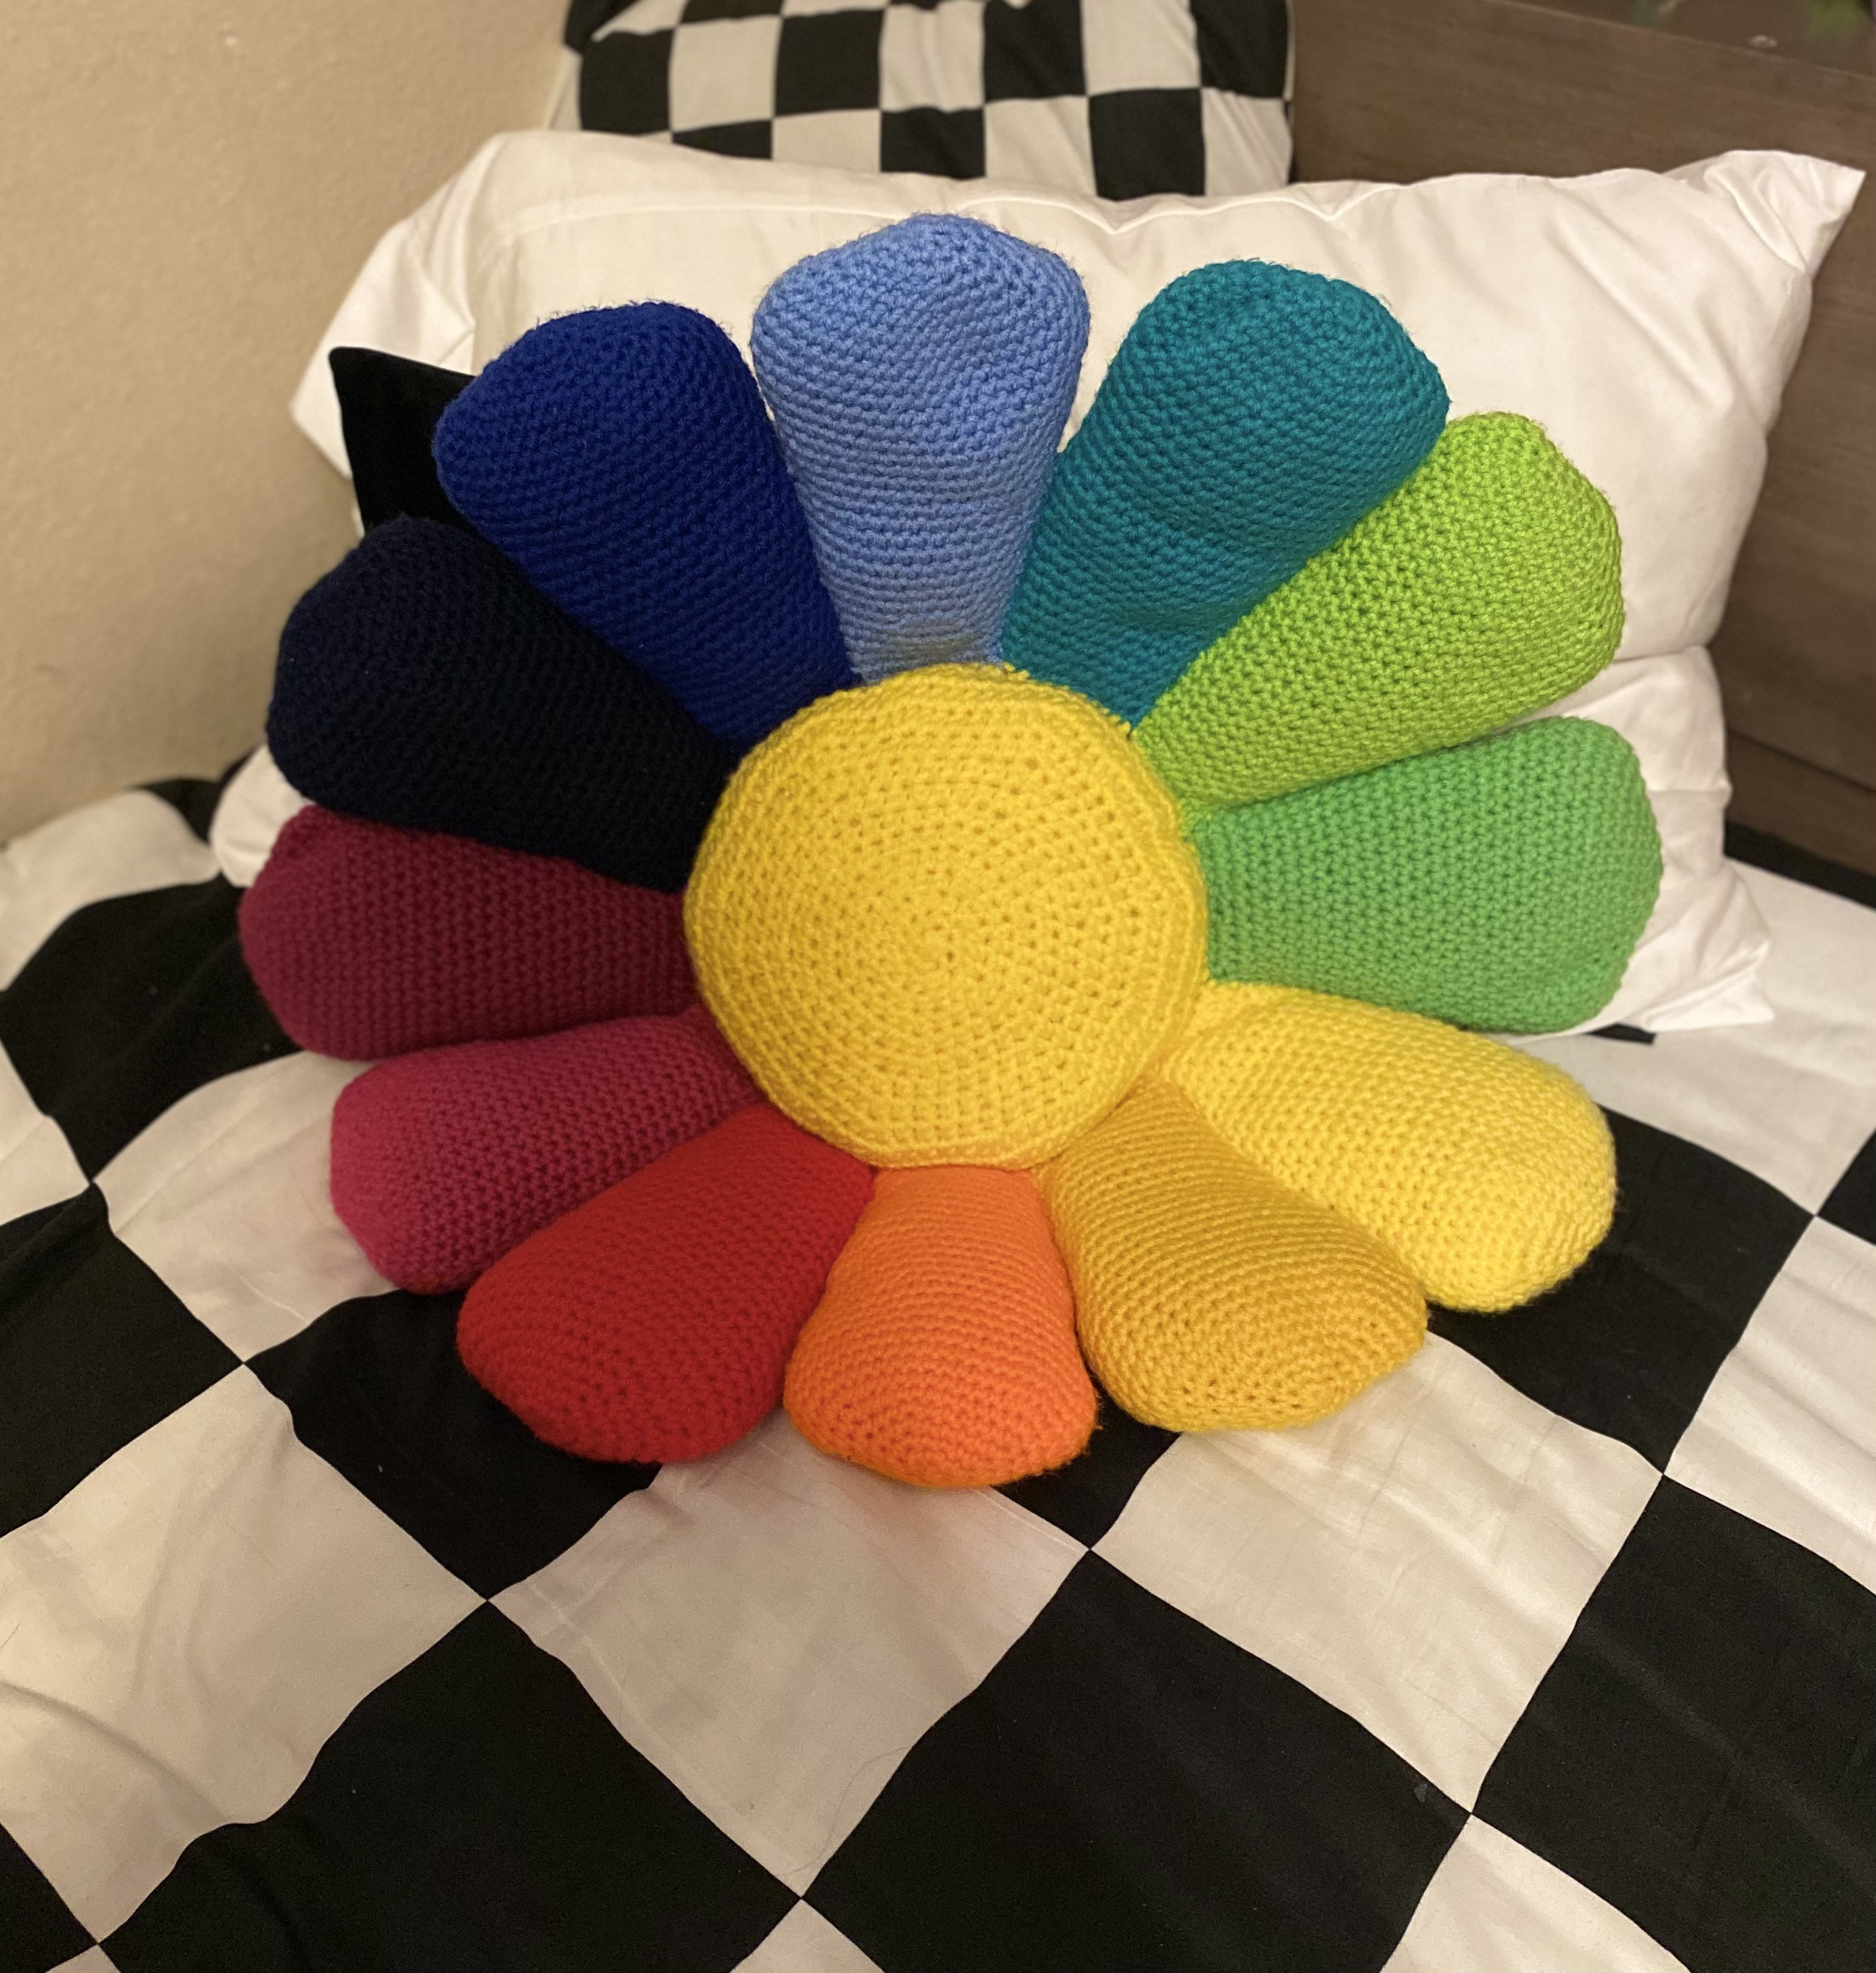 Takashi Murakami, Flower Cushion (Rainbow/Yellow/Blue) (2017), Available  for Sale